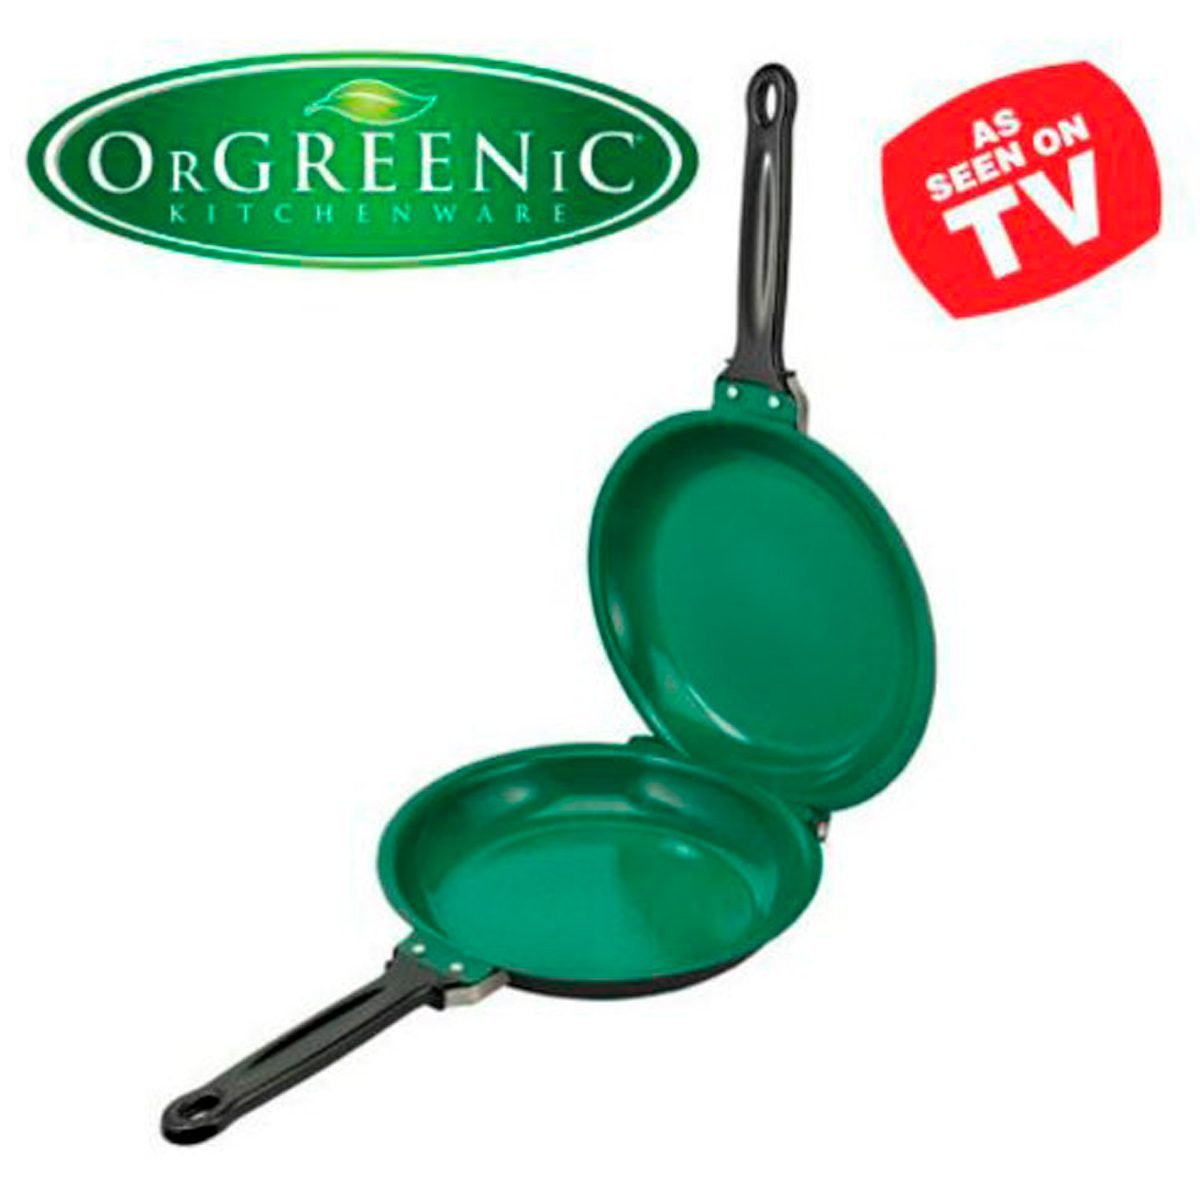 Original Orgreenic 12 Original Orgreenic Non-Stick Square Frying Pan